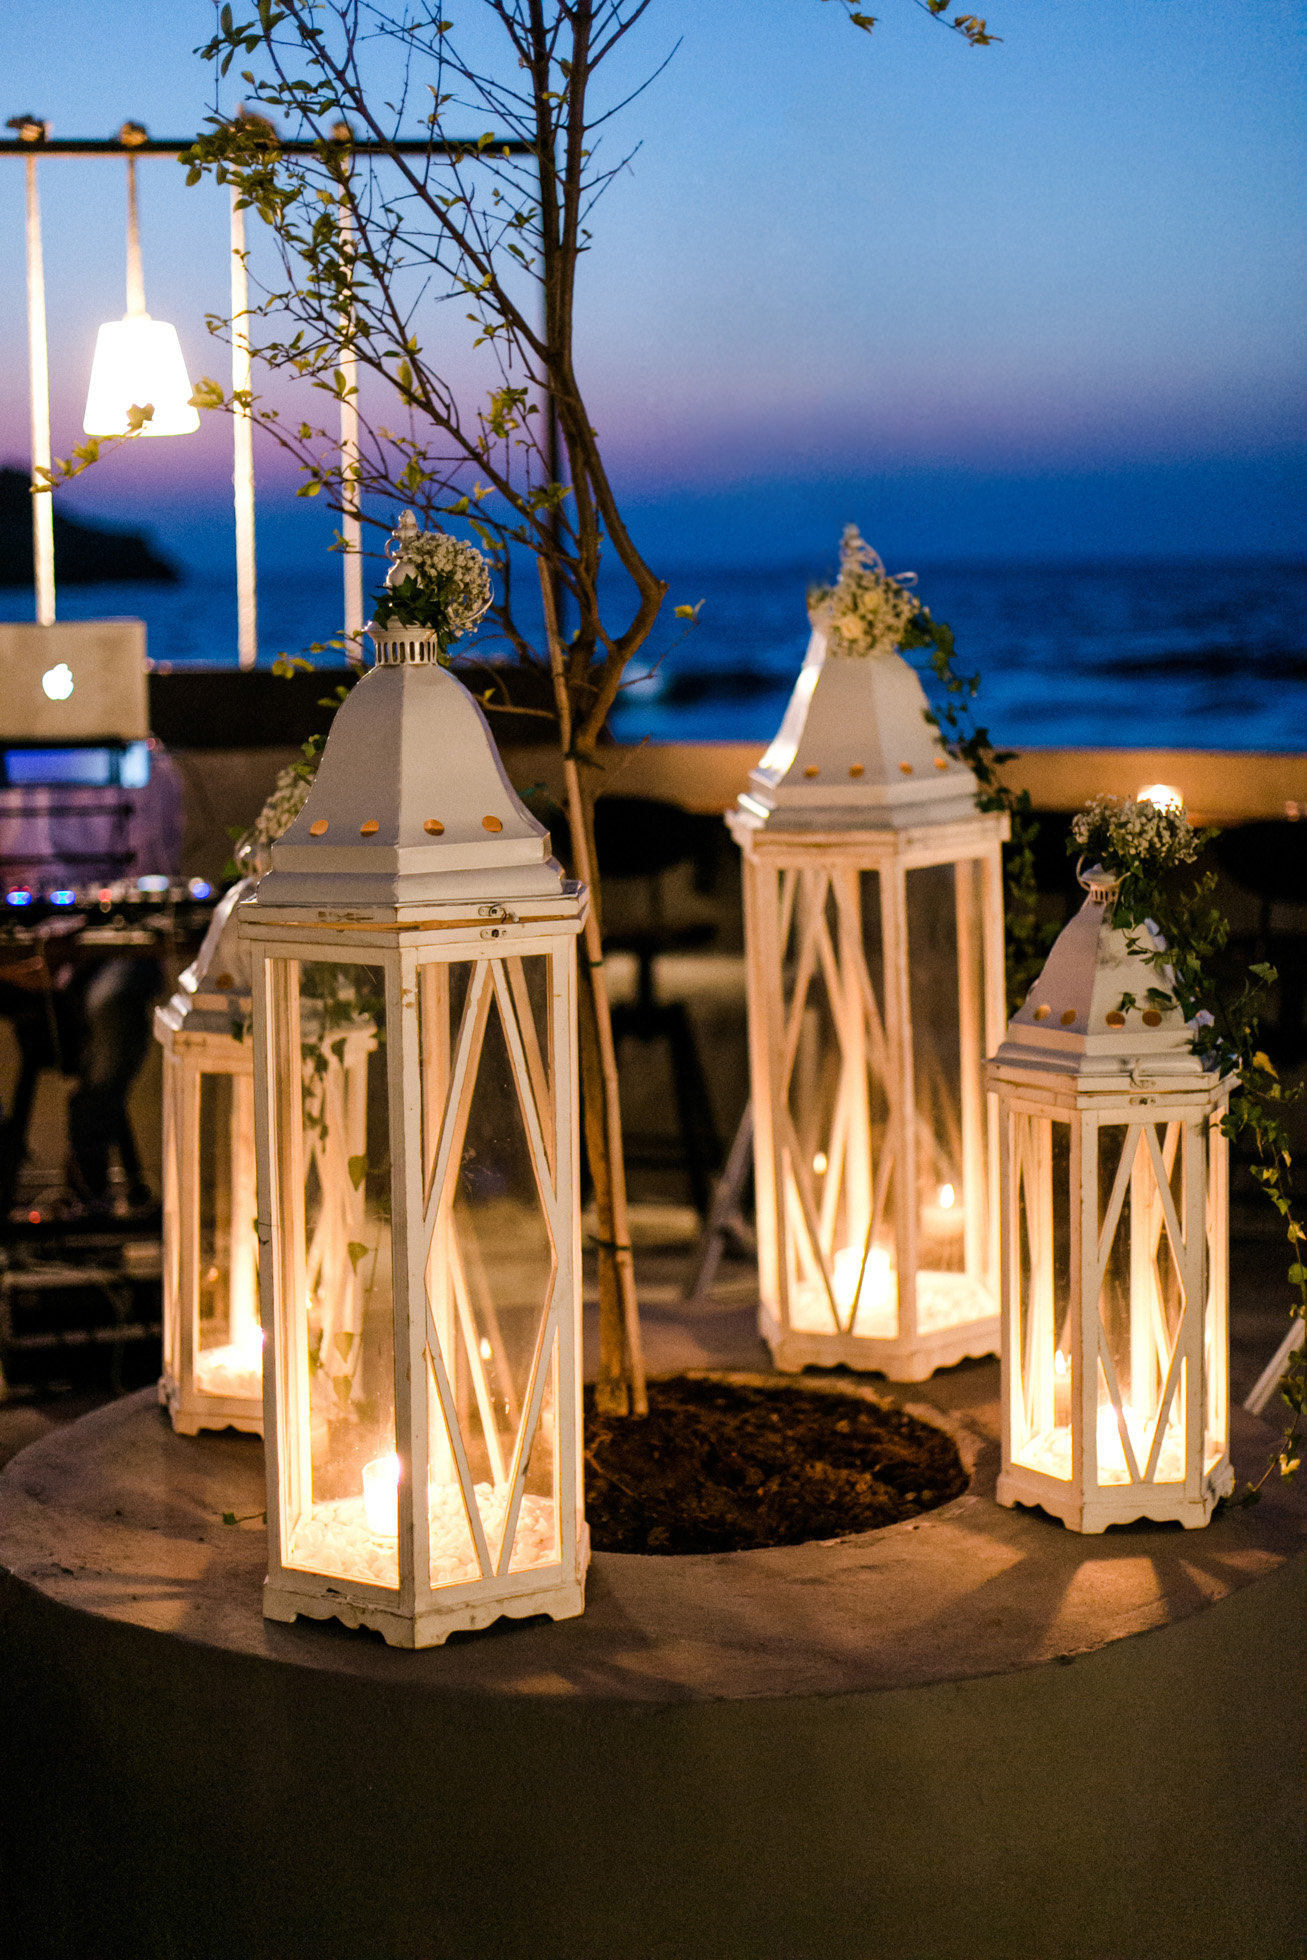 Elegant vintage destination wedding decorations in Rethymno, Crete, Greece.